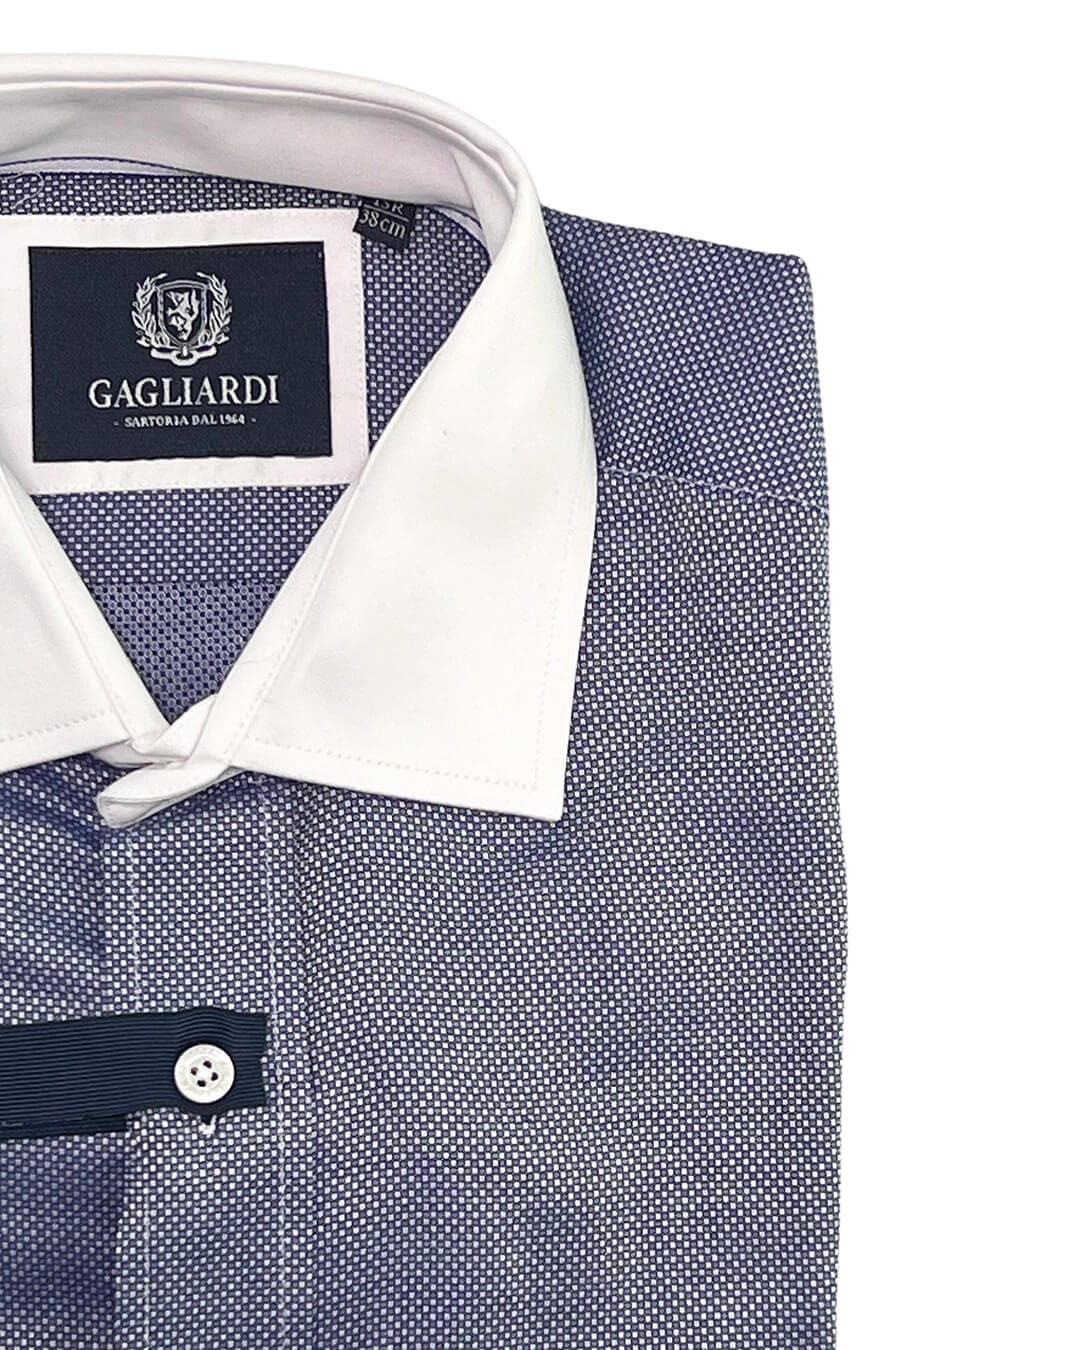 Gagliardi Shirts Shirt Twill Contrast Collar